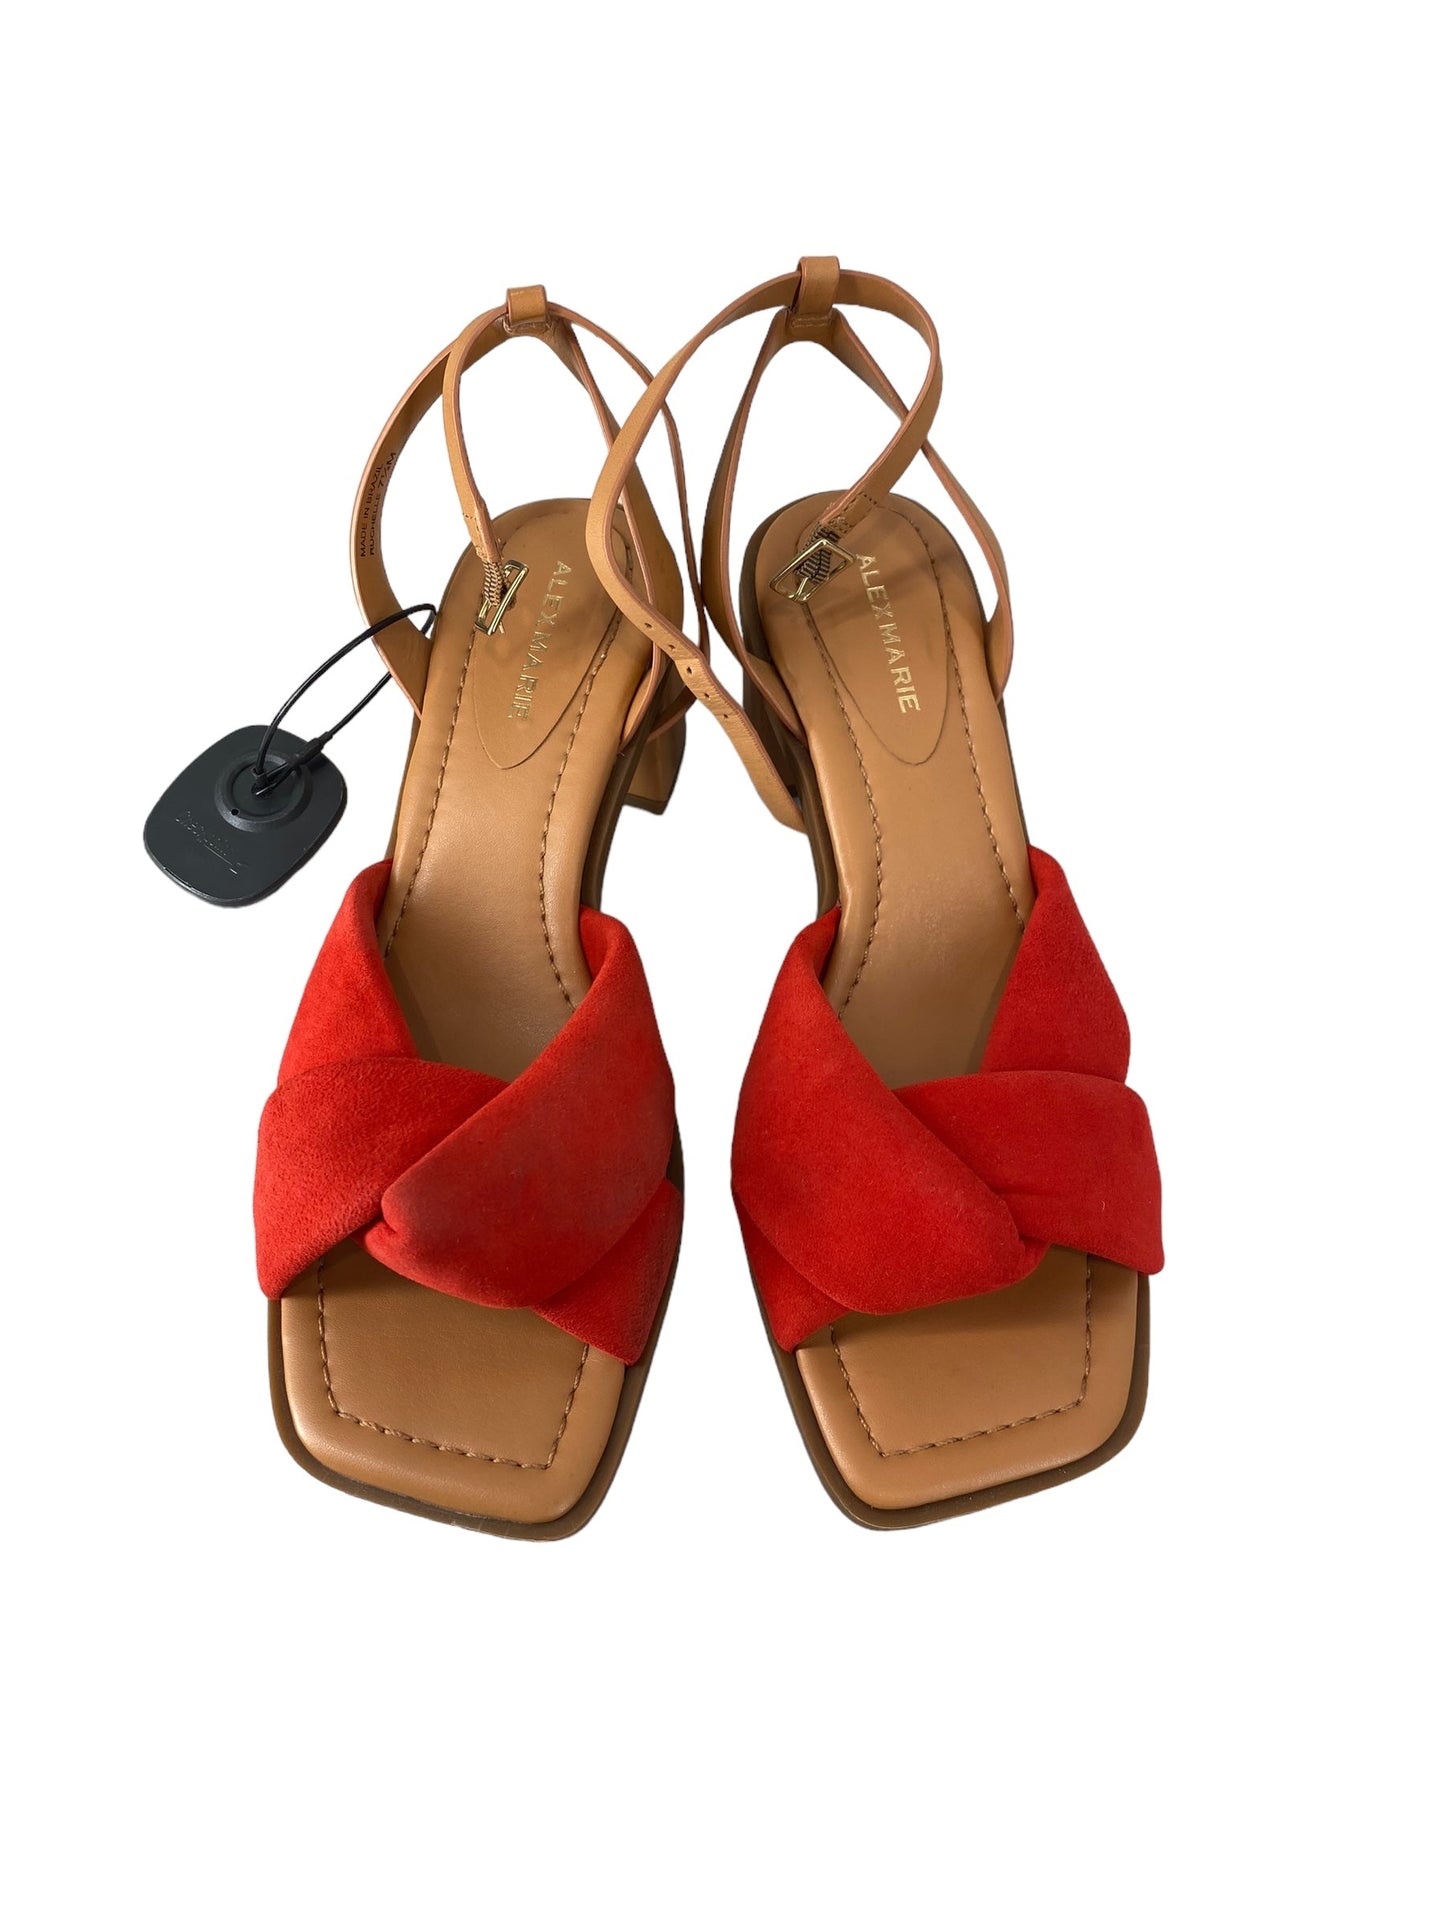 Red Sandals Heels Kitten Alex Marie, Size 7.5